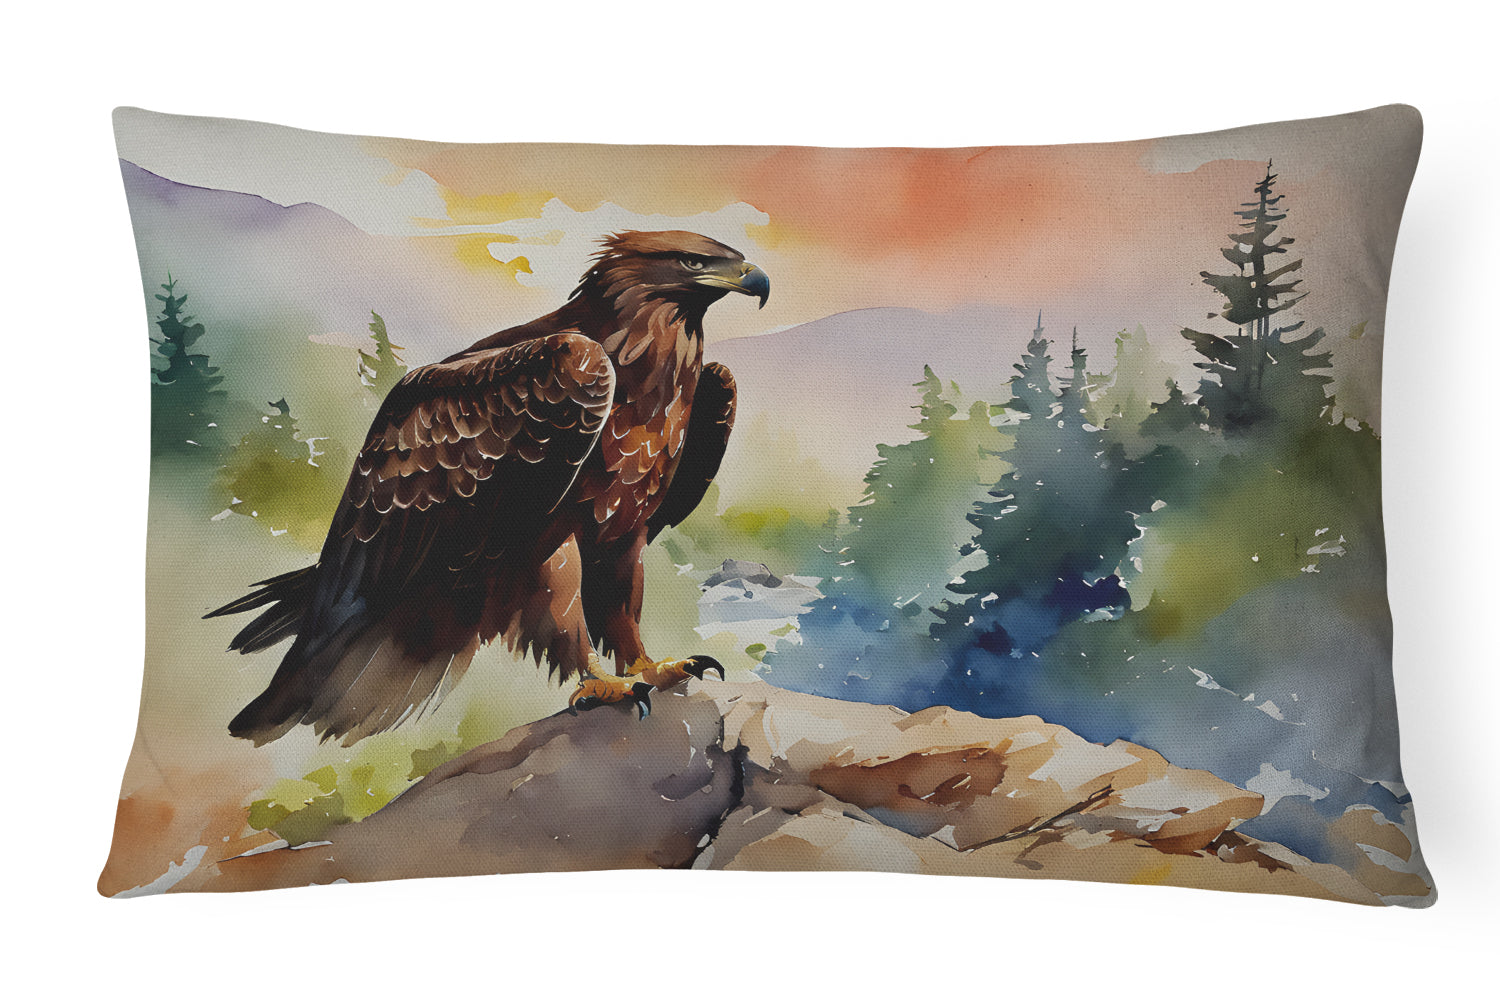 Buy this Eagle Throw Pillow